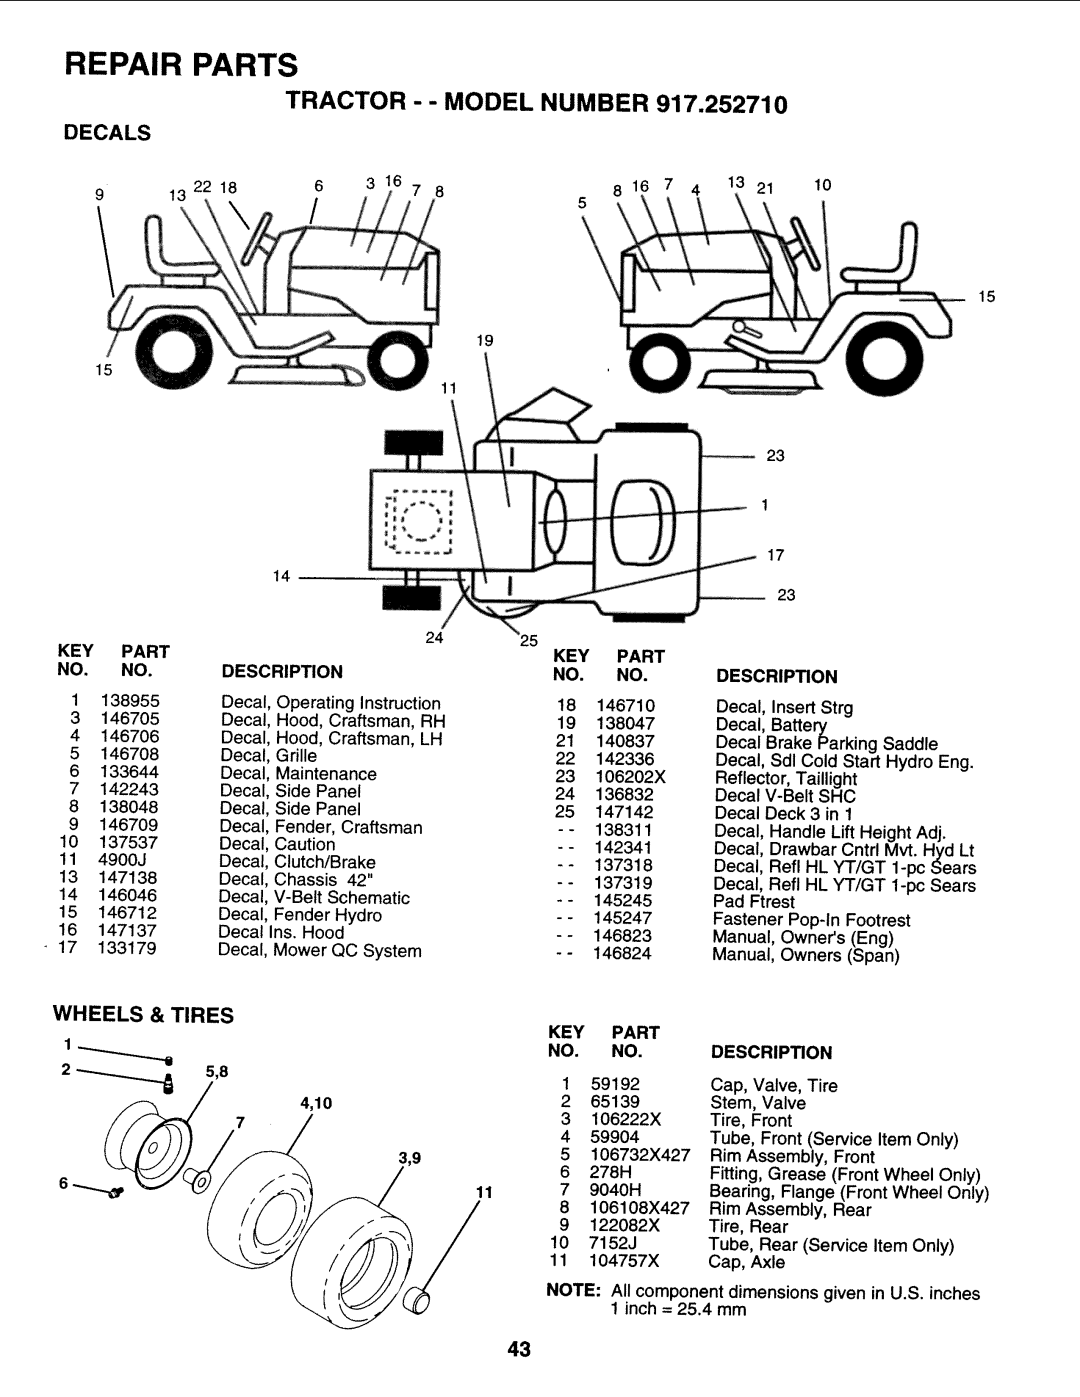 Sears 917.25271 owner manual Decals, Wheels & Tires, Repair Parts, Tractor -- Model Number, Description 